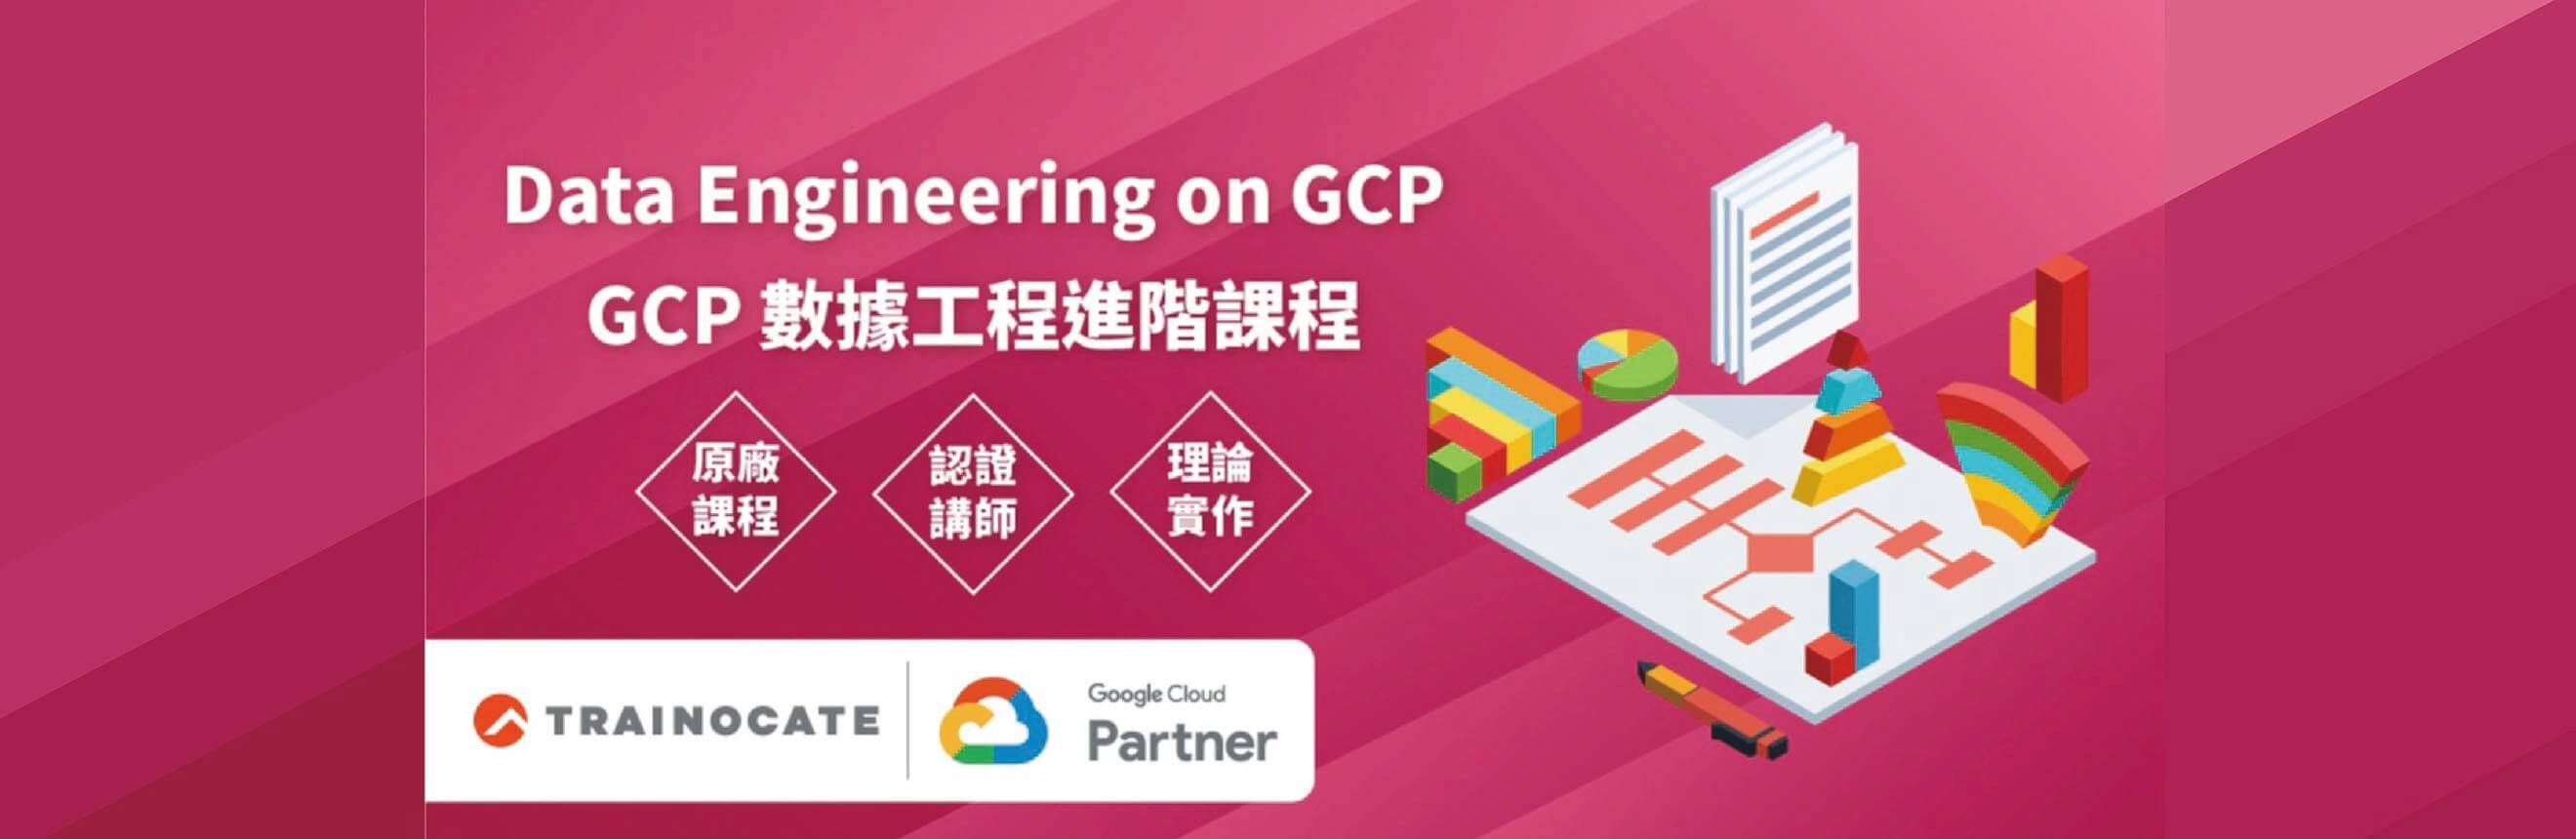 【GCP】Data Engineering on Google Cloud Platform 數據工程進階認證課程